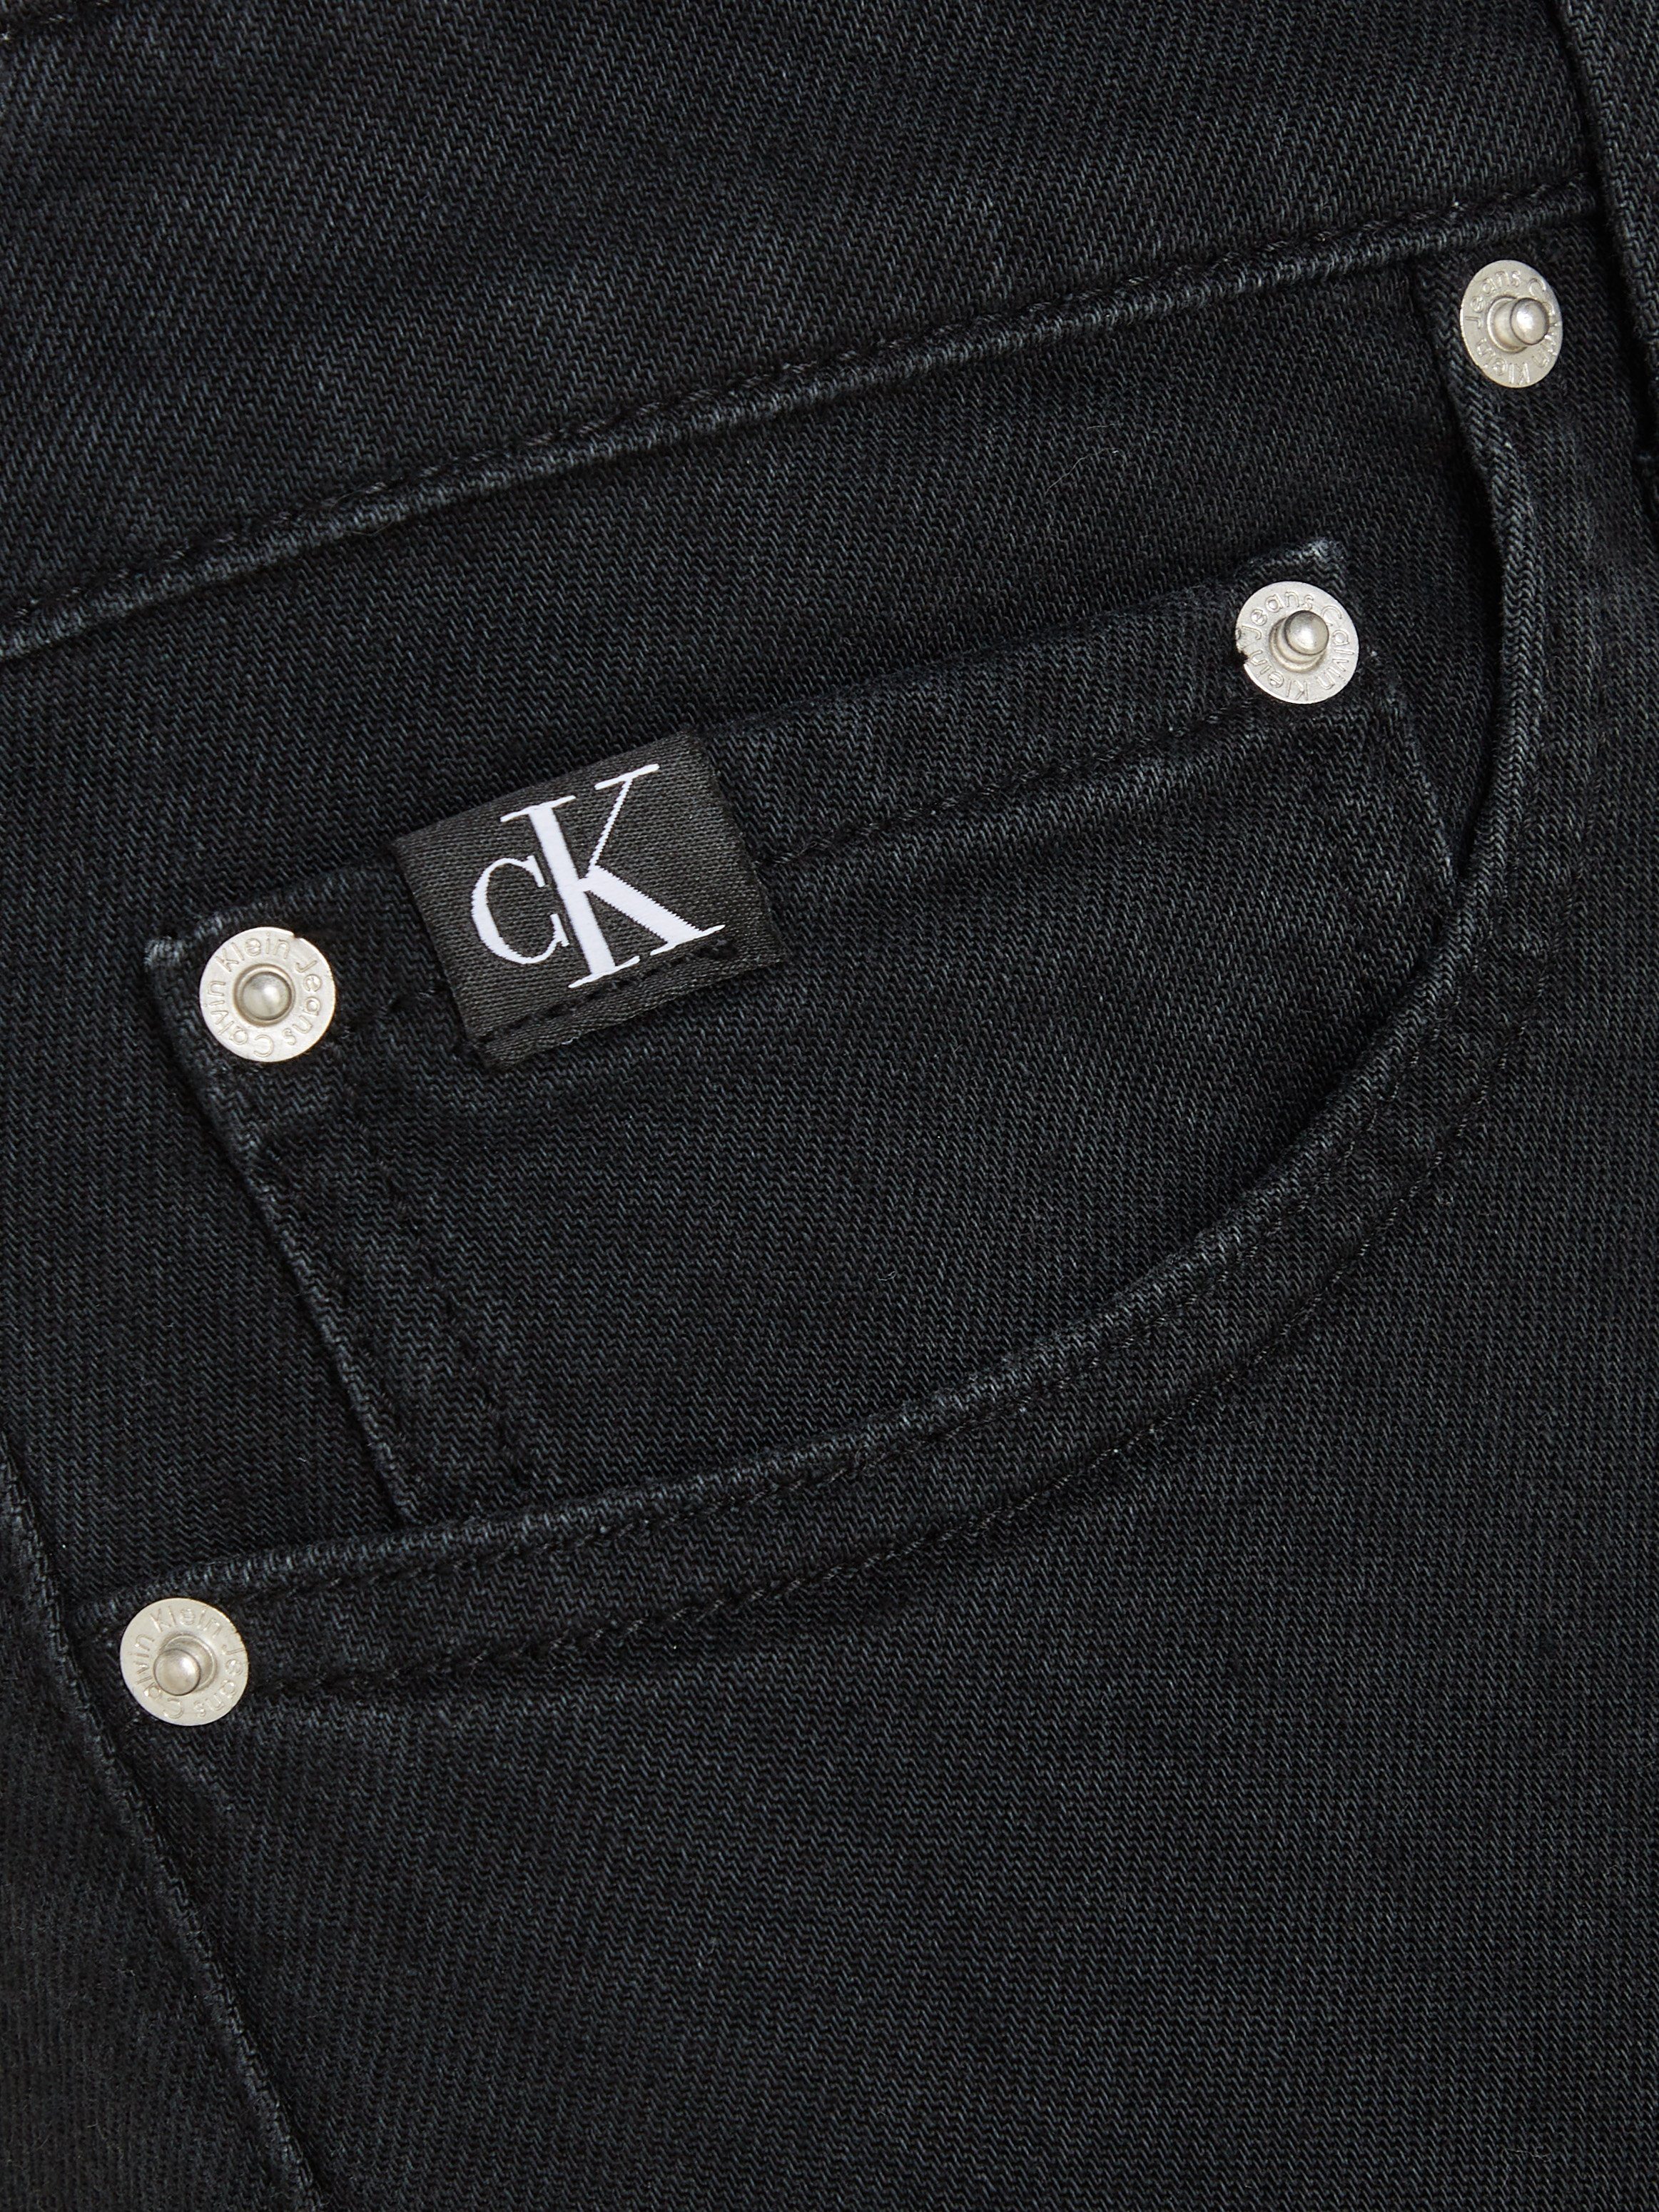 NOS Jeans JeansSLIM Slim-fit-Jeans Black Calvin Denim Klein